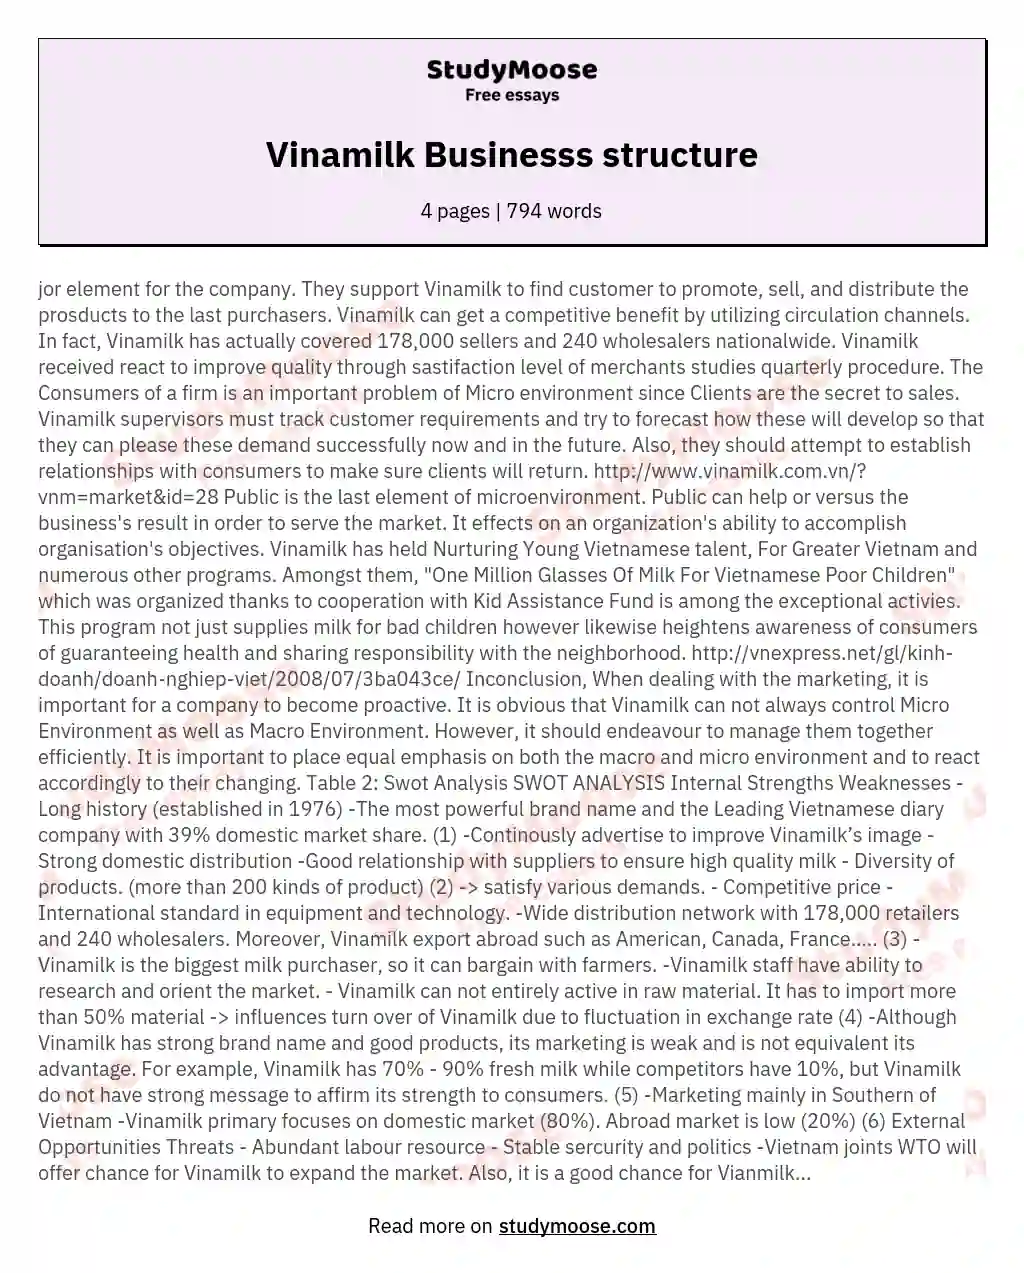 Vinamilk Businesss structure essay